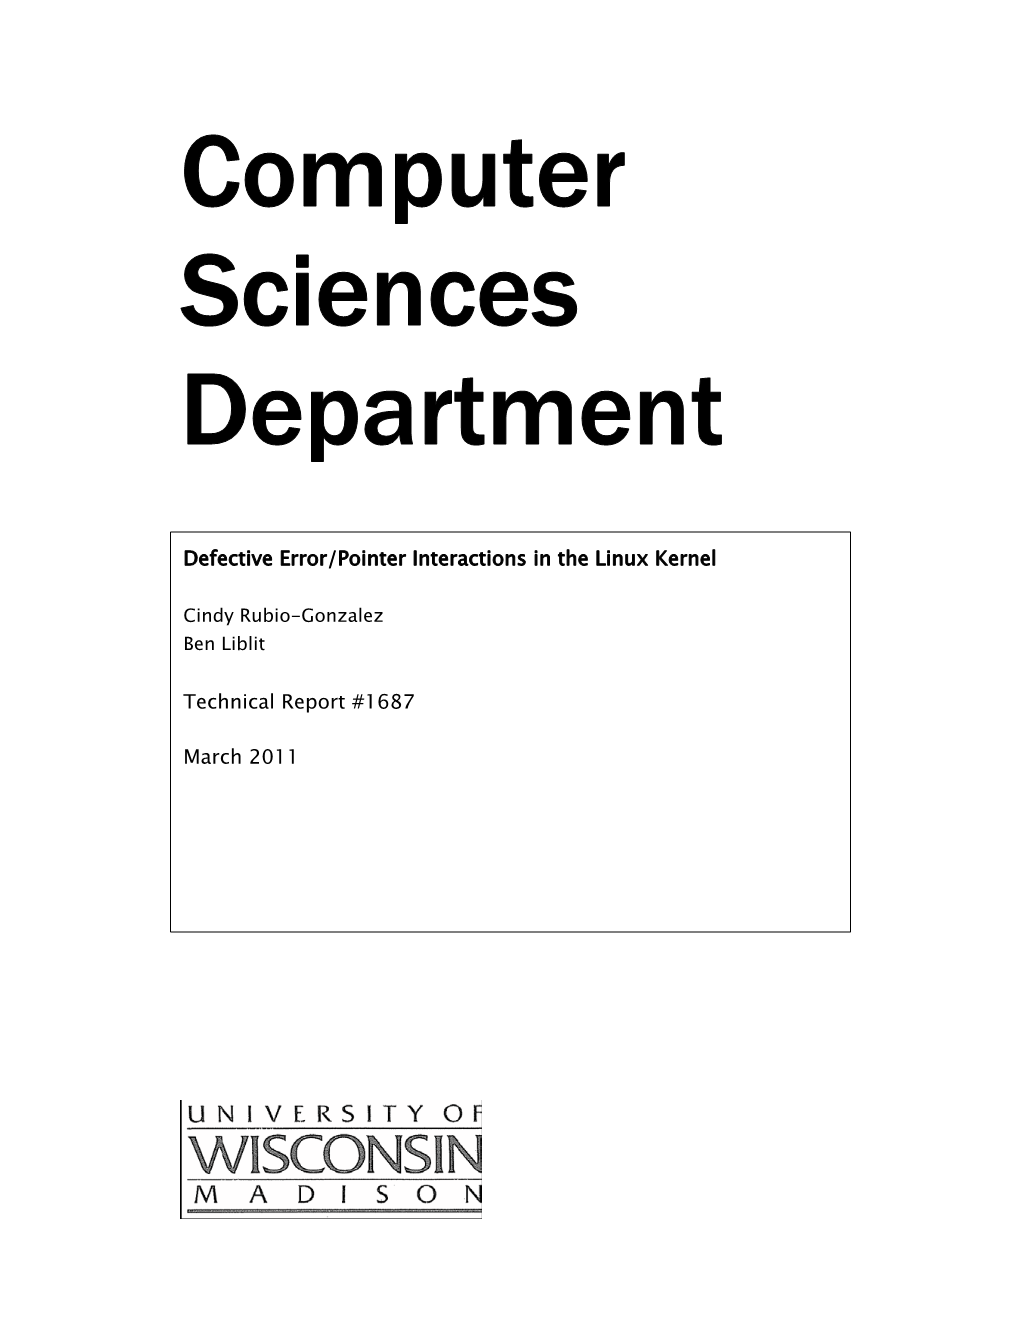 Computer Sciences Department